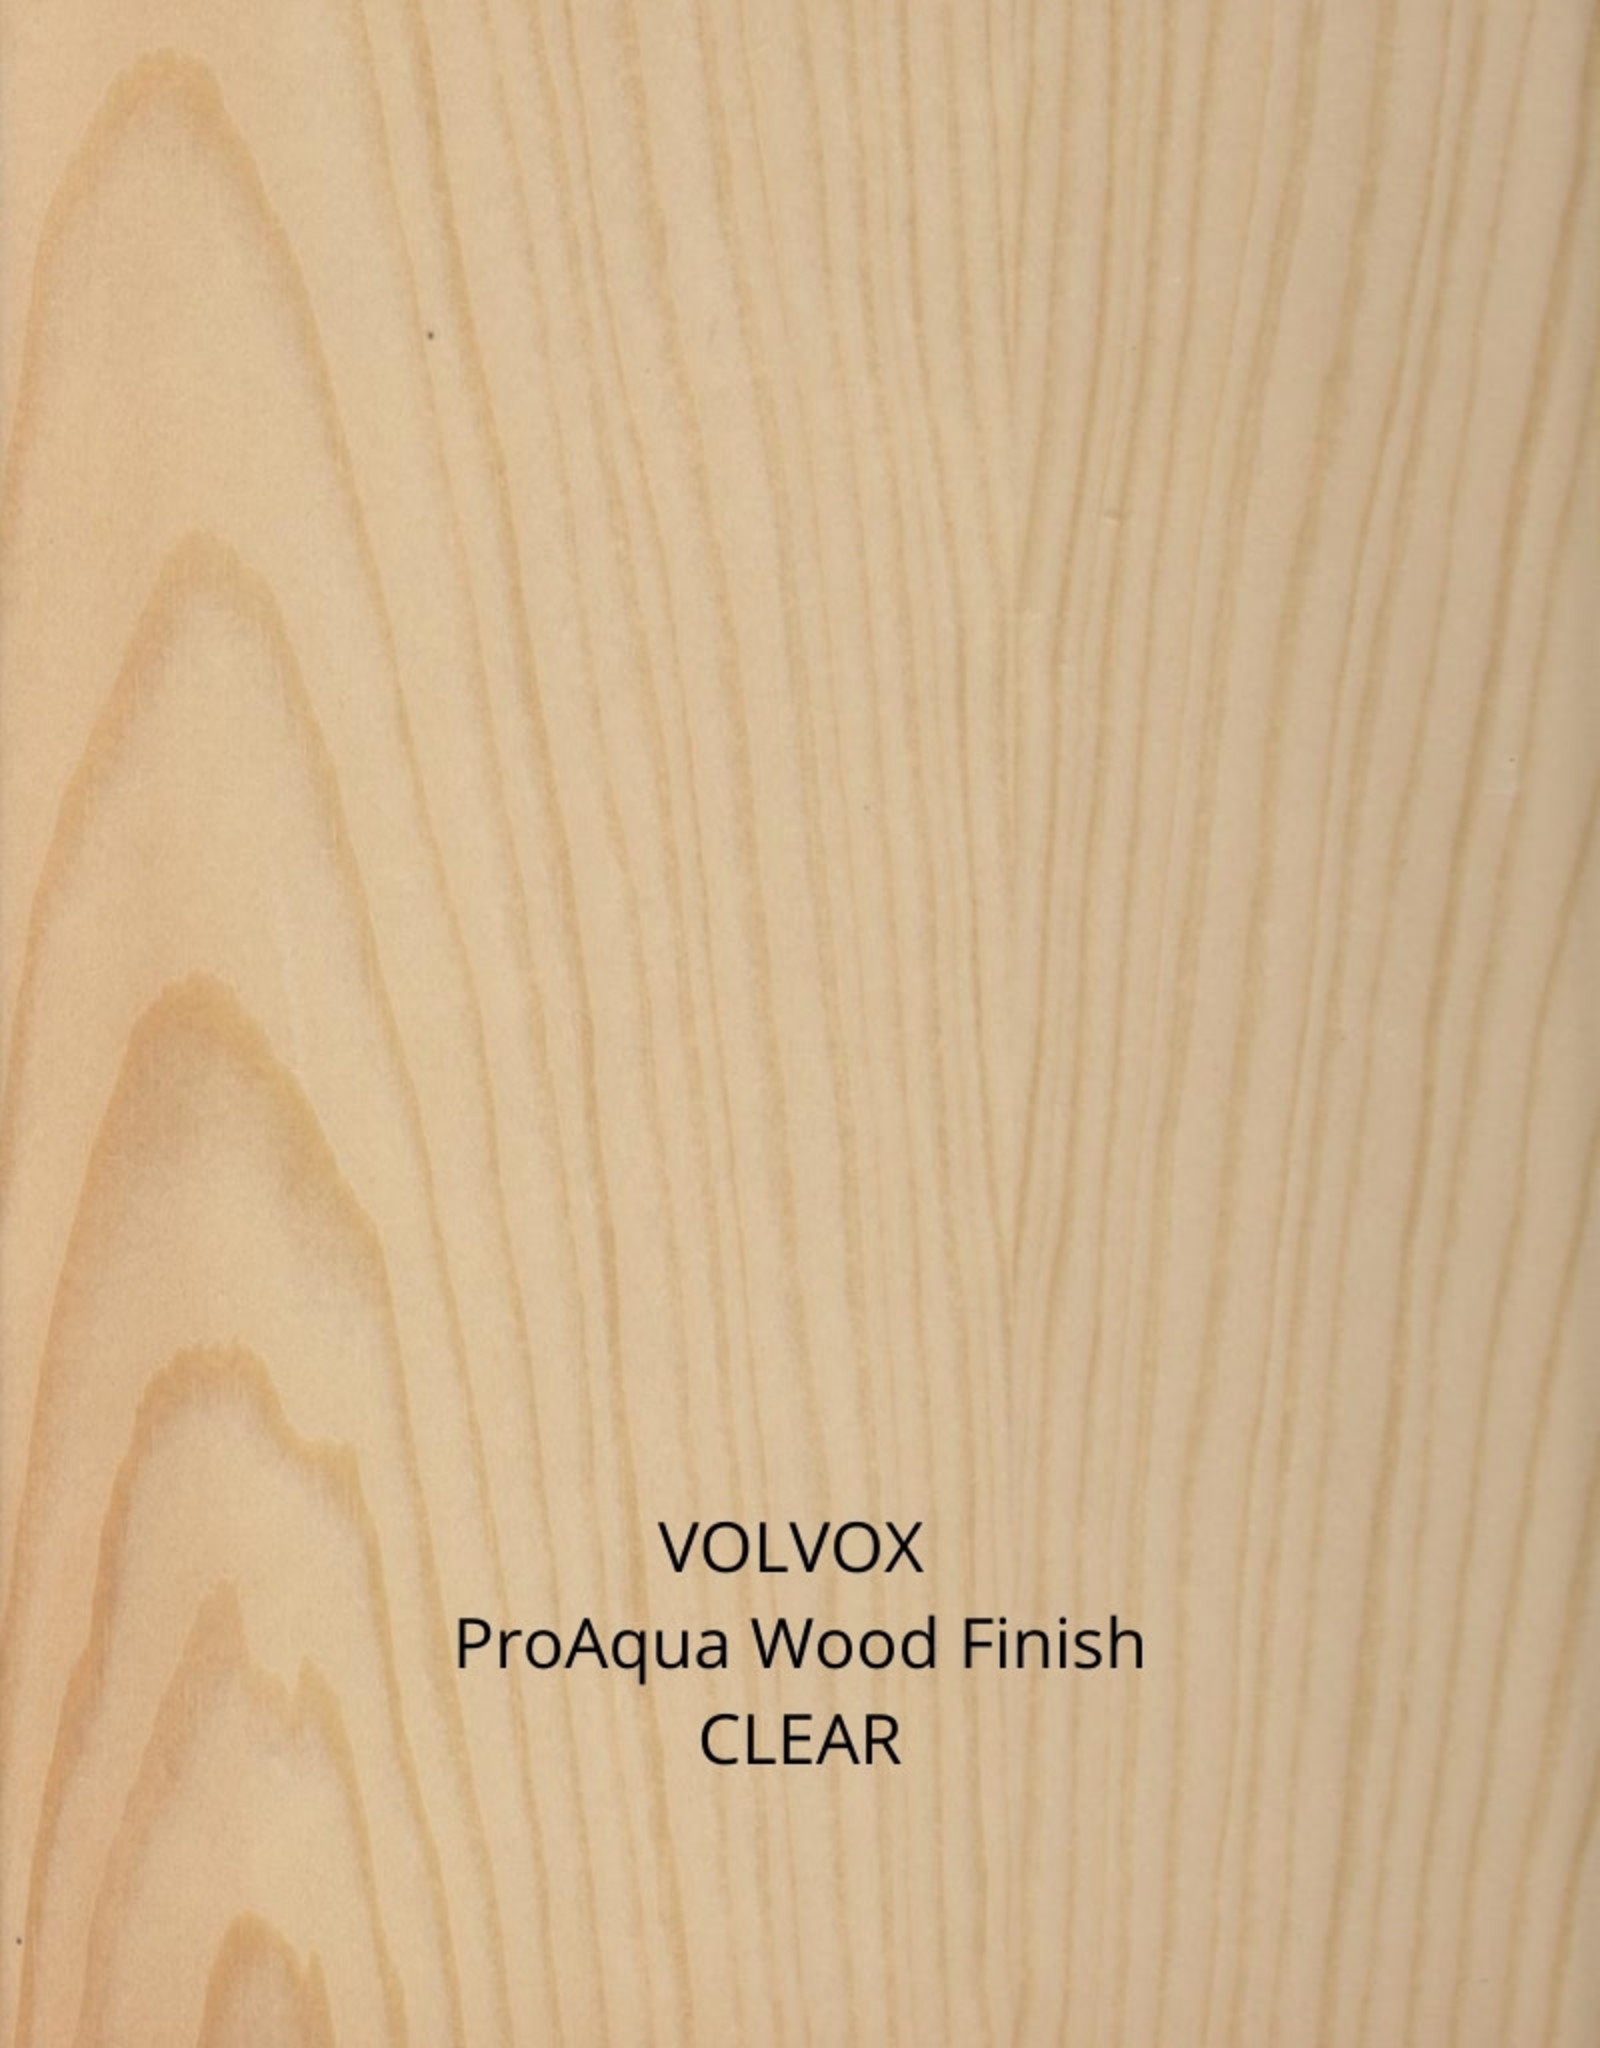 VOLVOX ProAqua Wood Finish